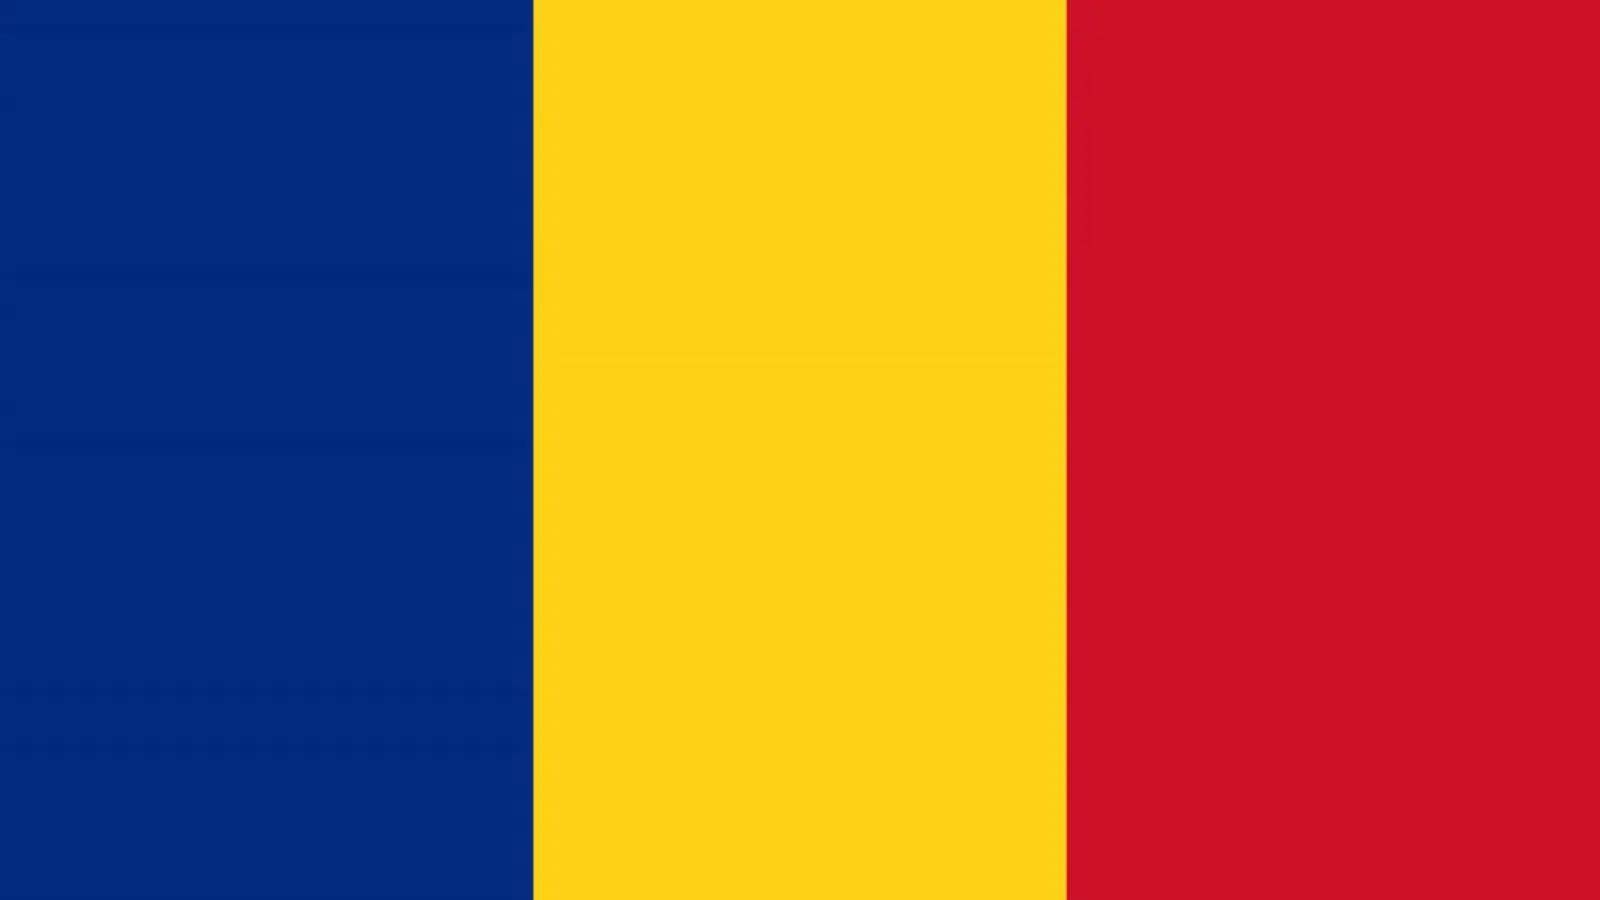 TERREMOTO Romania Annuncio ULTIMA VOLTA INFP Rumeni